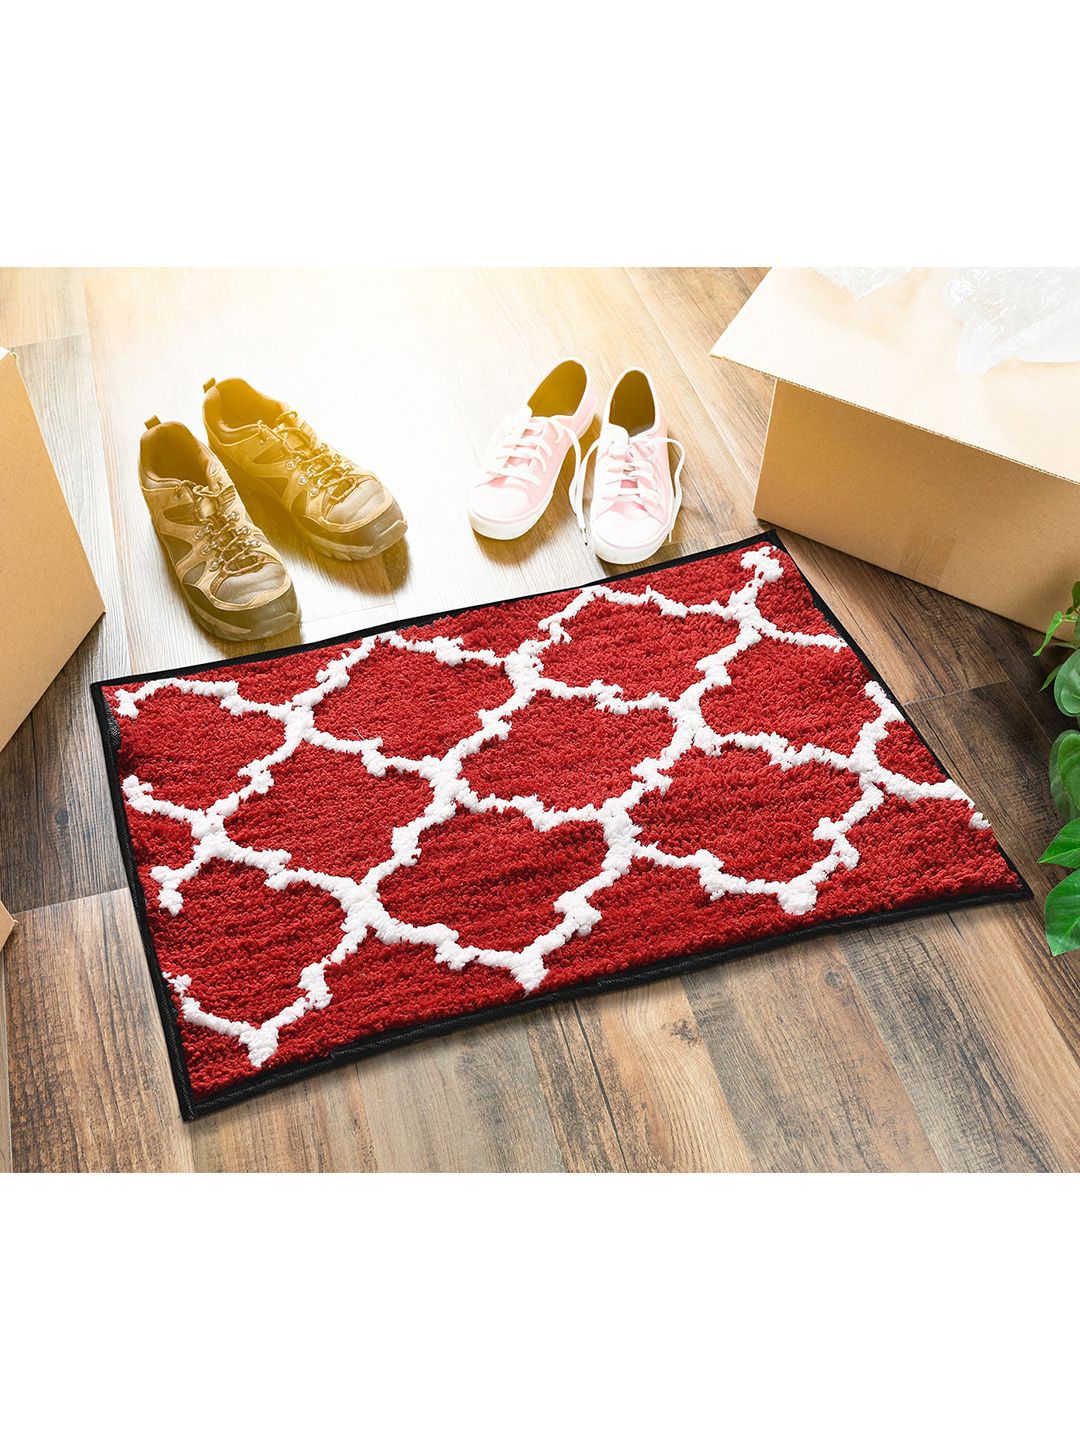 AAZEEM Red & White Geometric Cotton Anti Skid Doormats Price in India